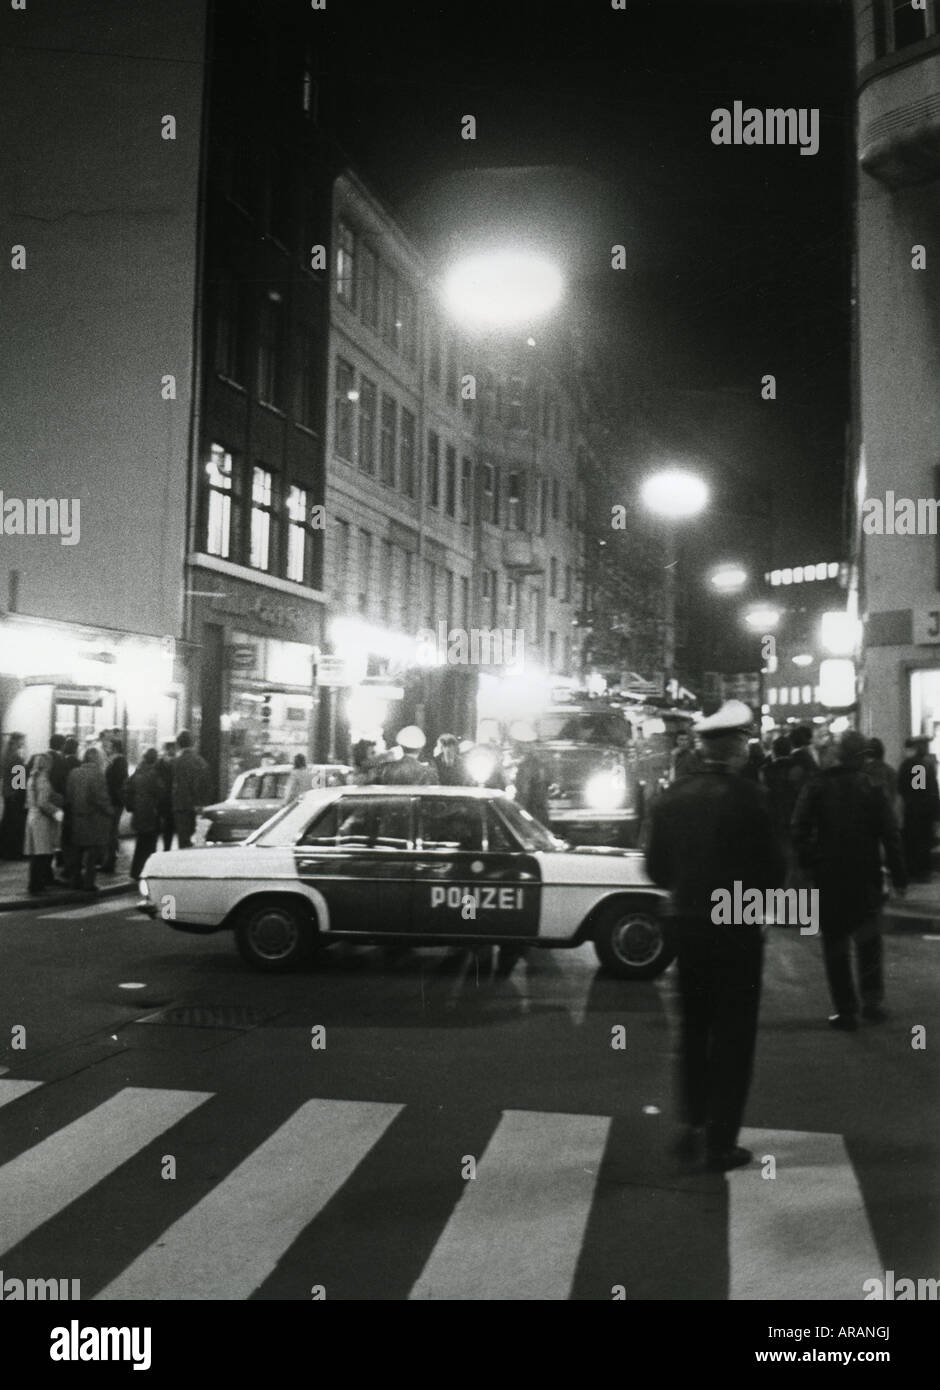 police, Germany, operation, patrol car is locking a street, night shot, 1972, Stock Photo